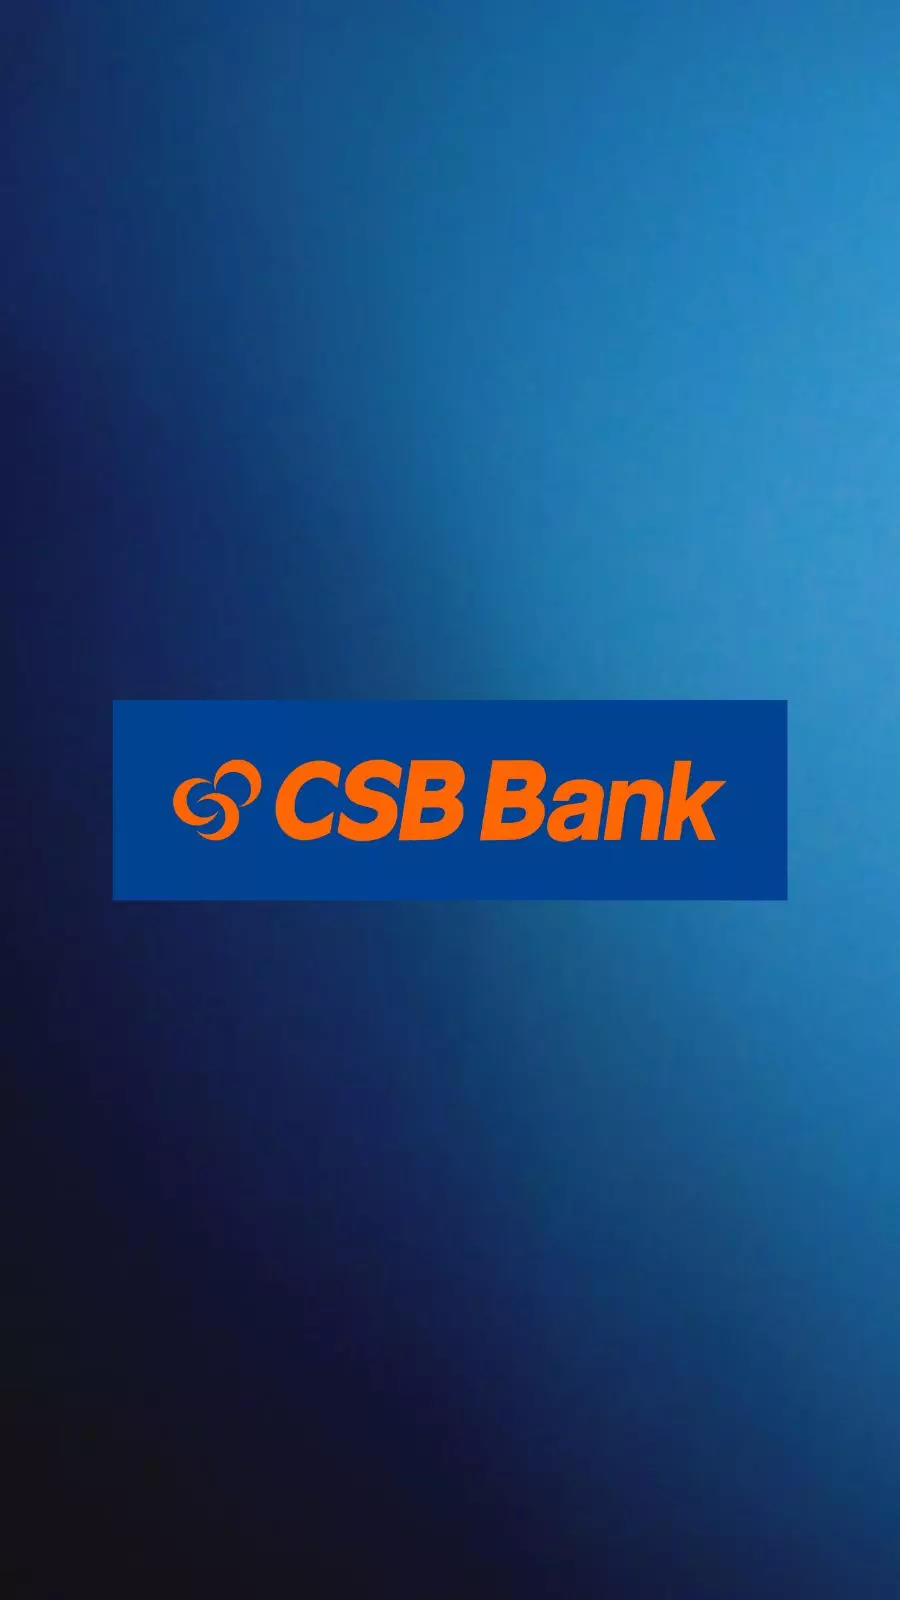 CSB BANK LOGO PEWTER LOOK METAL ANTIQUE MONEY TRUCK PIGGY COIN BANK | eBay